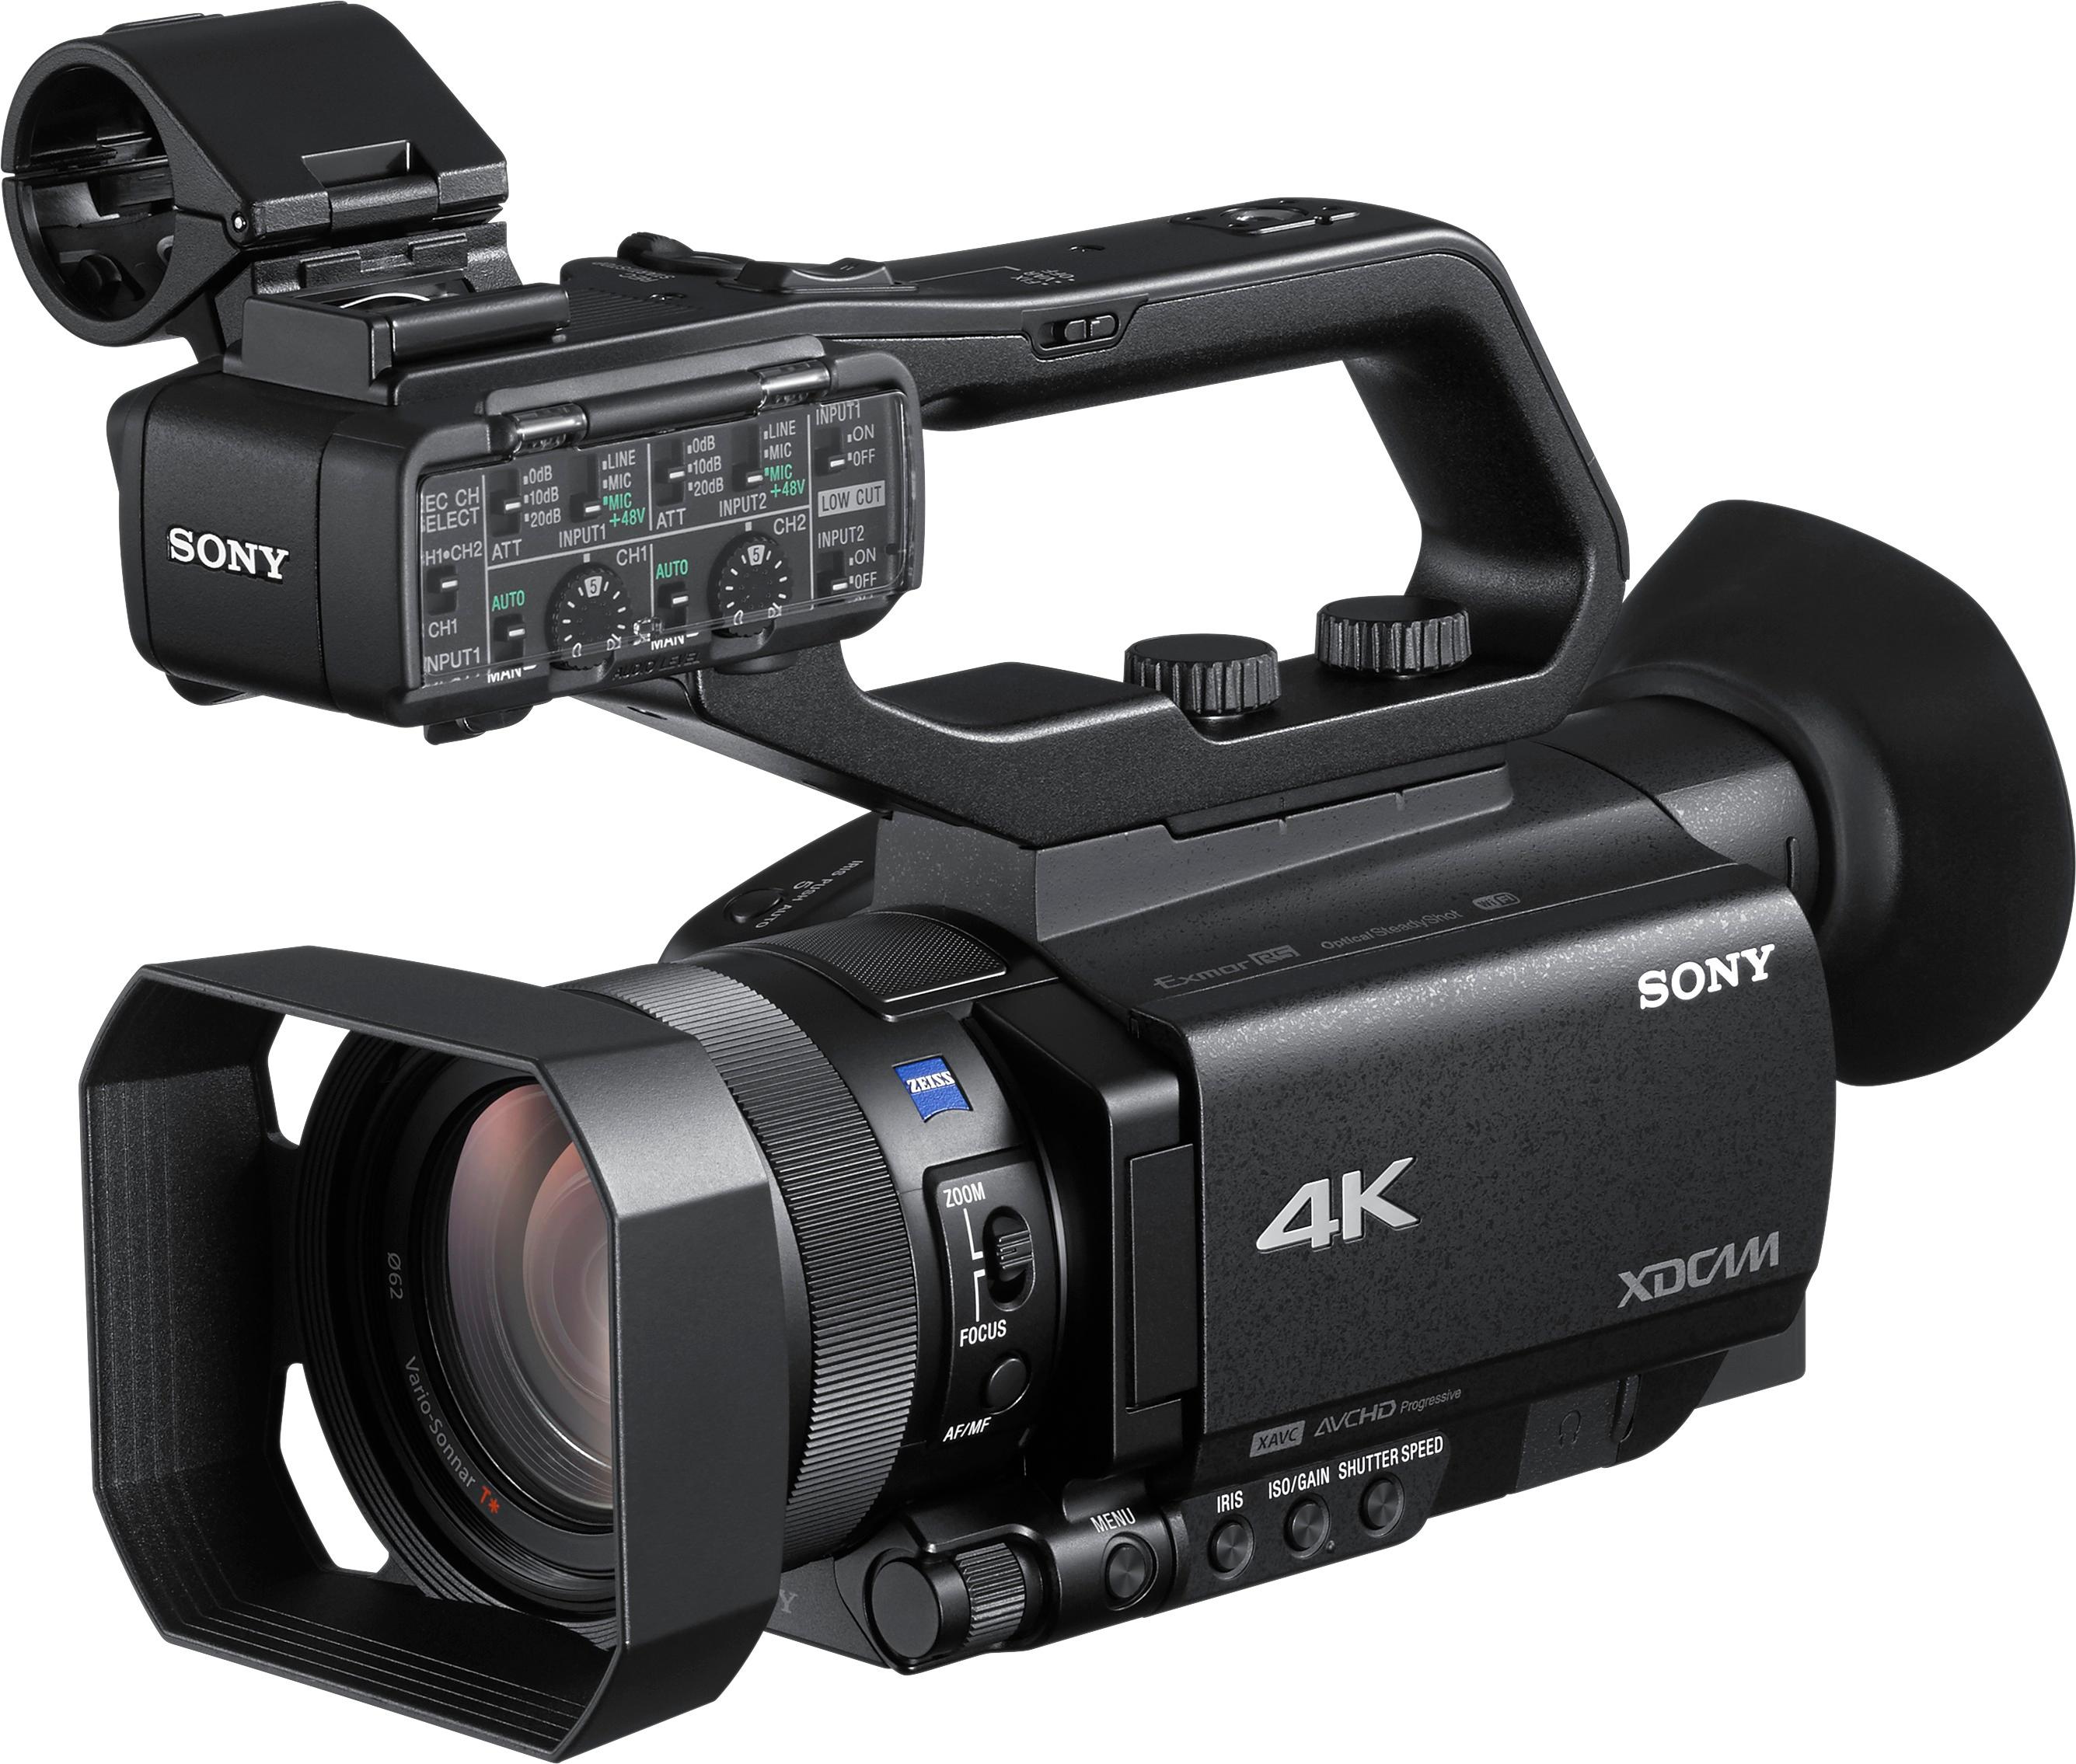 Angle View: Sony - XDCAM PXW-Z90V 4K Flash Memory Premium Camcorder